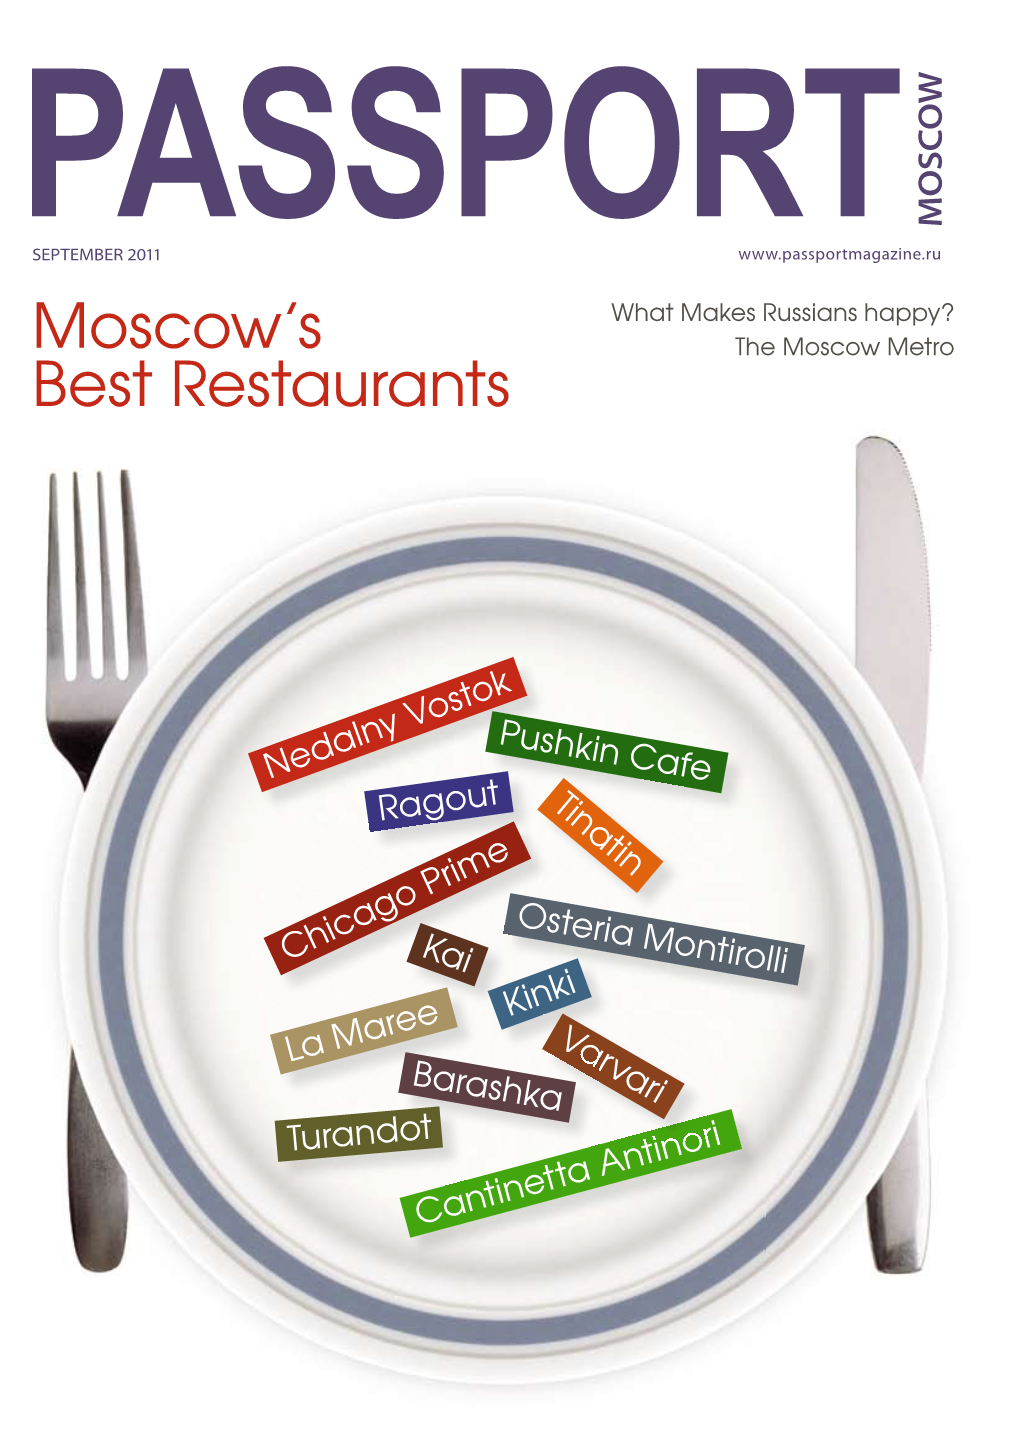 Moscow's Best Restaurants